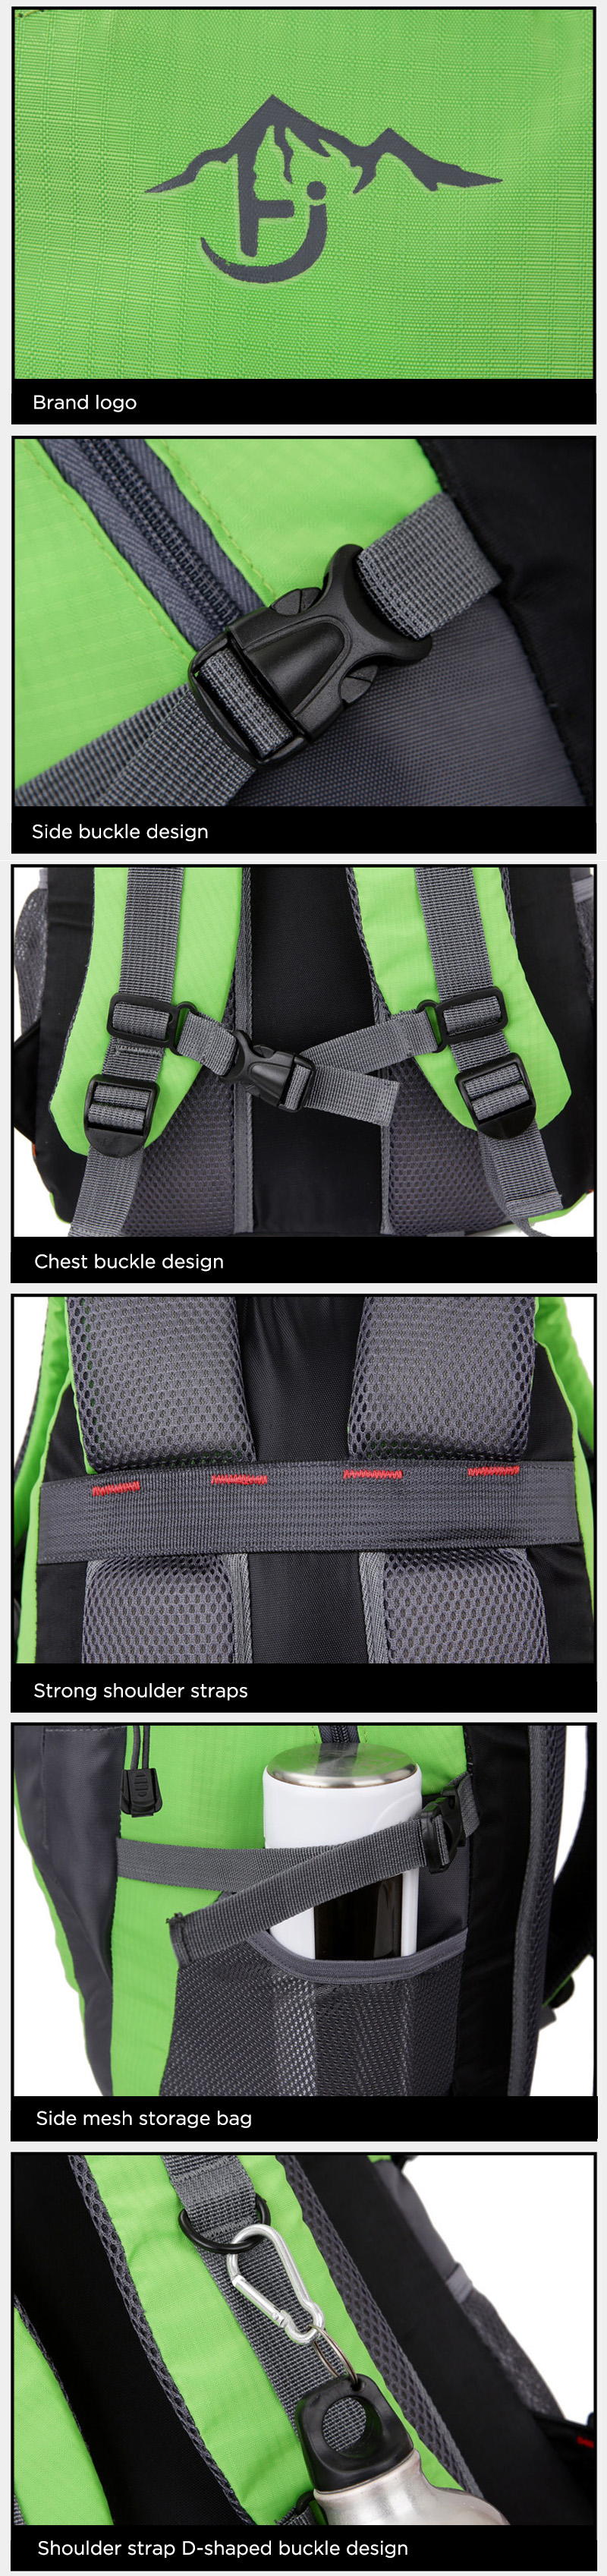 Nylon-Waterproof-Climbing-Bag-Leisure-Travel-Backpack-Shoulder-Bag-Rucksack-1560233-2